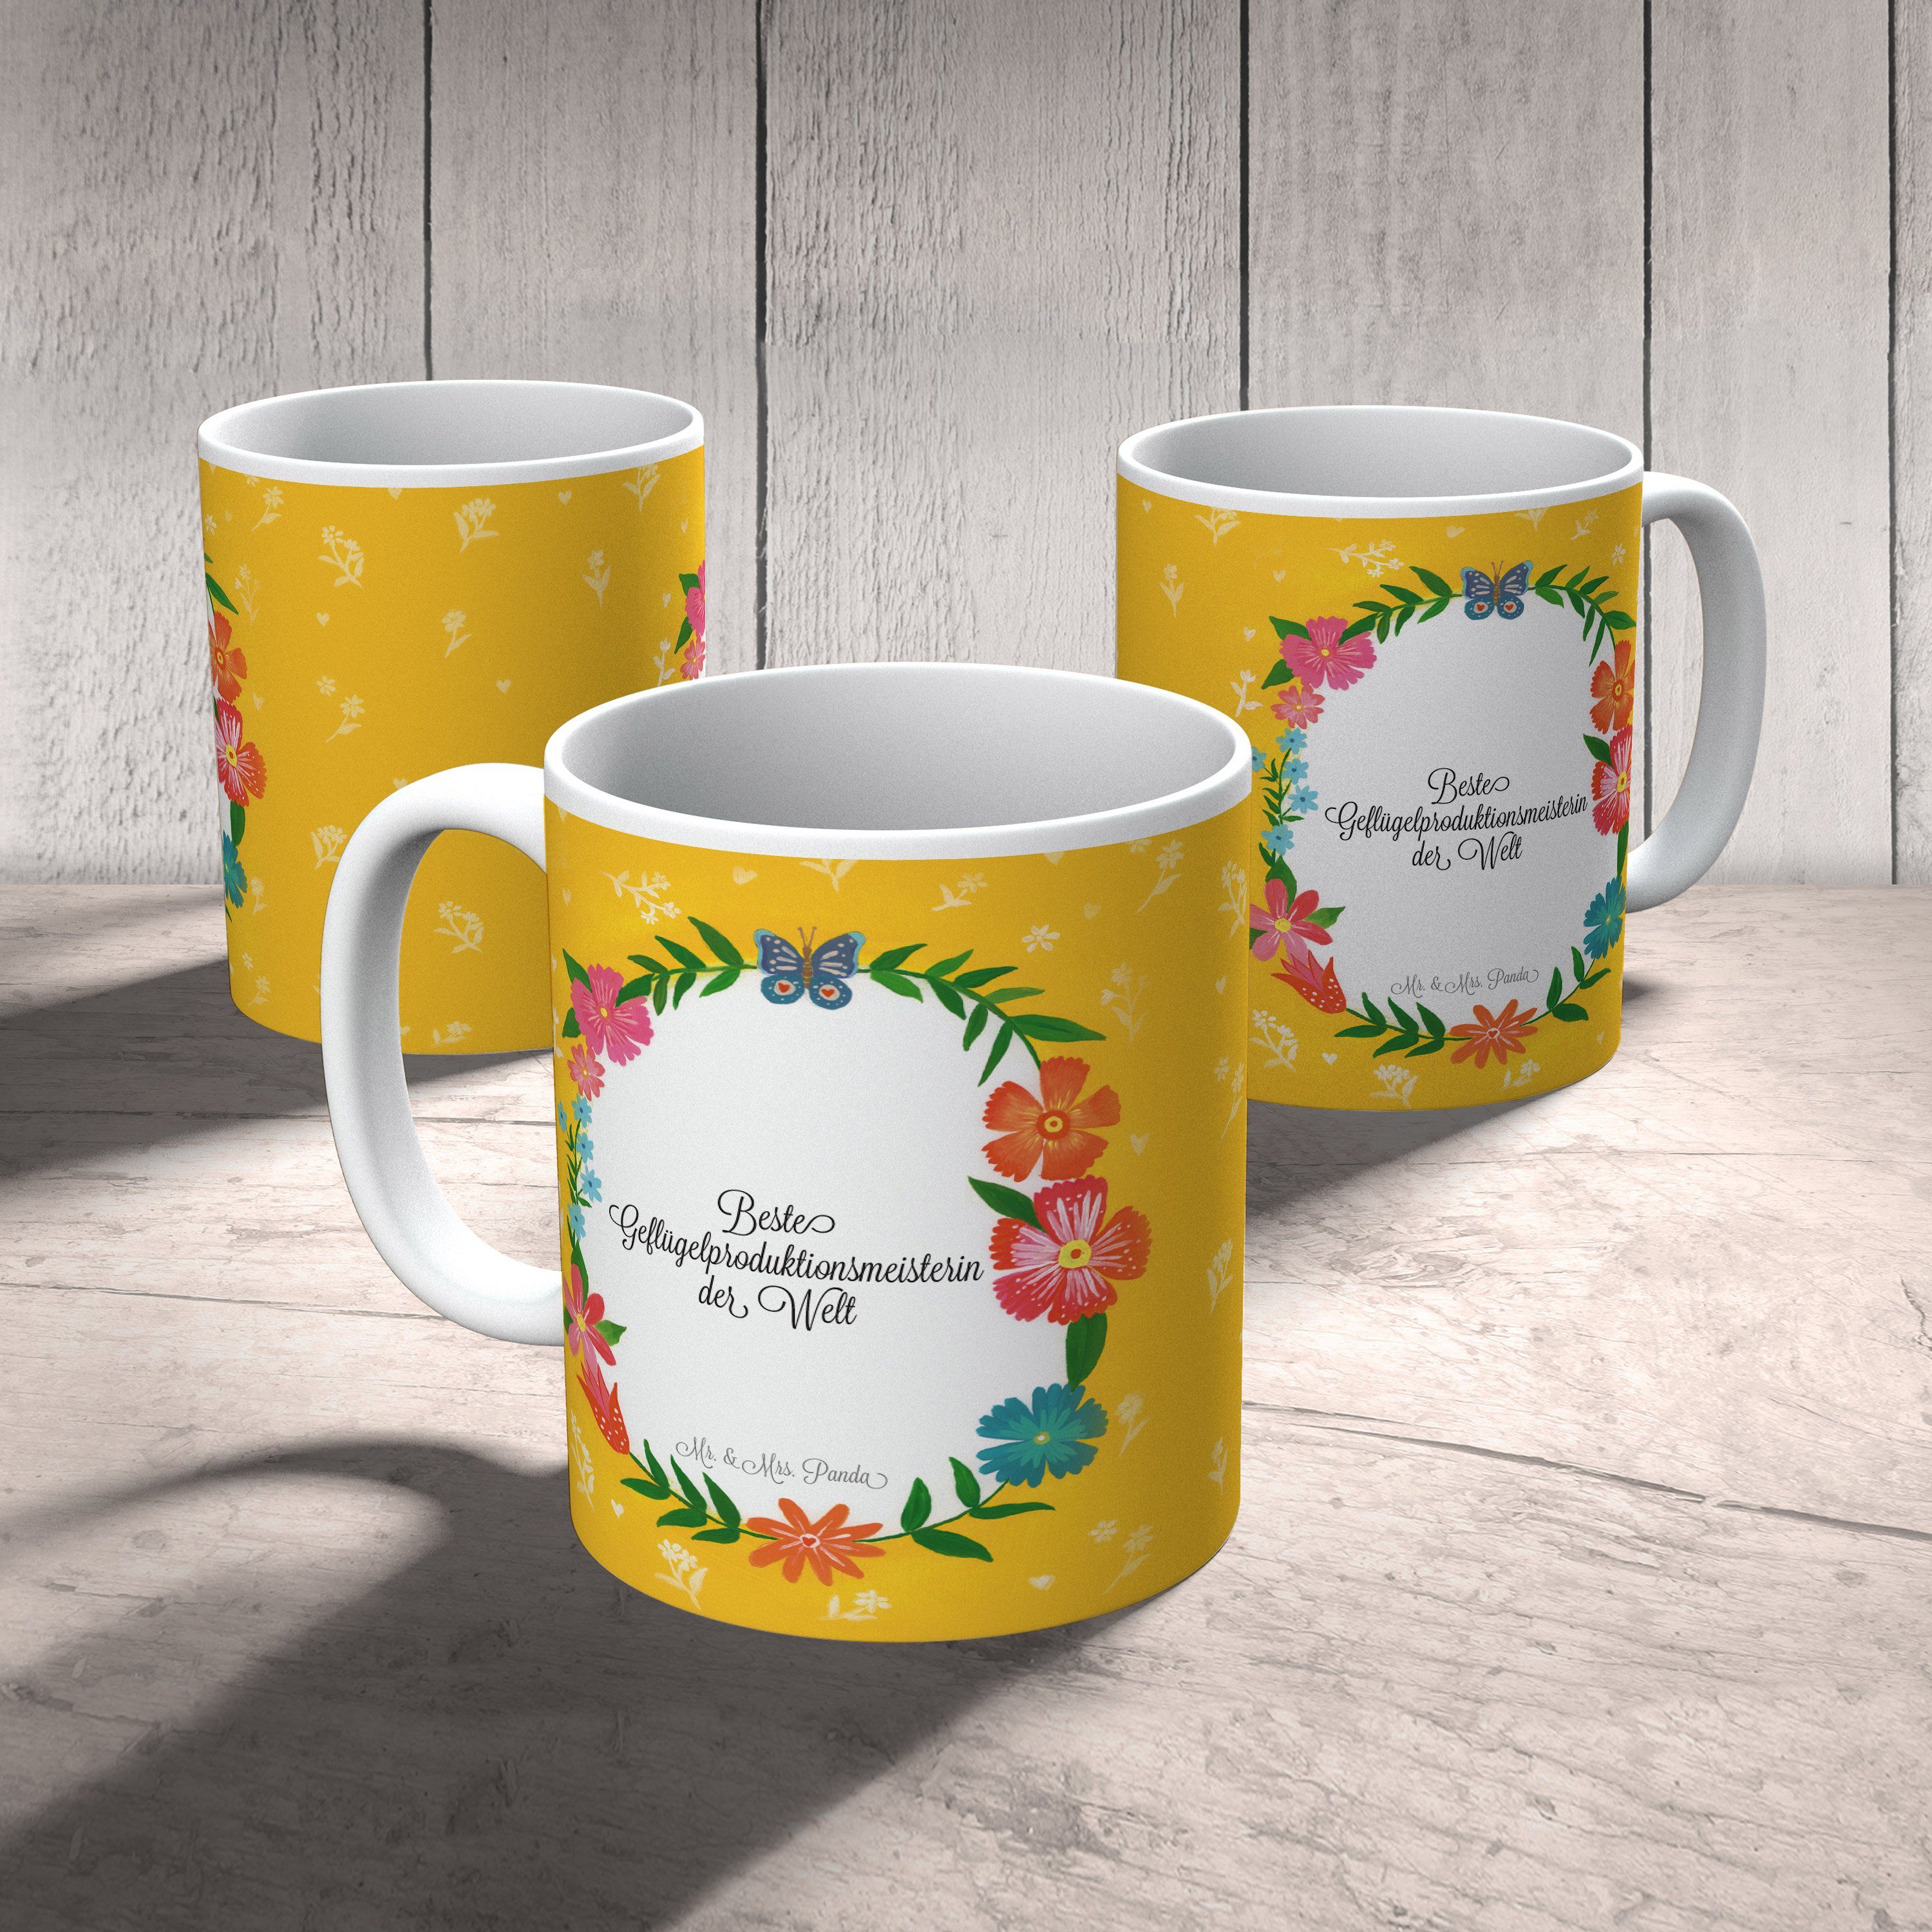 Mr. & Mrs. Ausbildung, Kaffeebec, Geflügelproduktionsmeisterin - Rente, Panda Keramik Tasse Geschenk